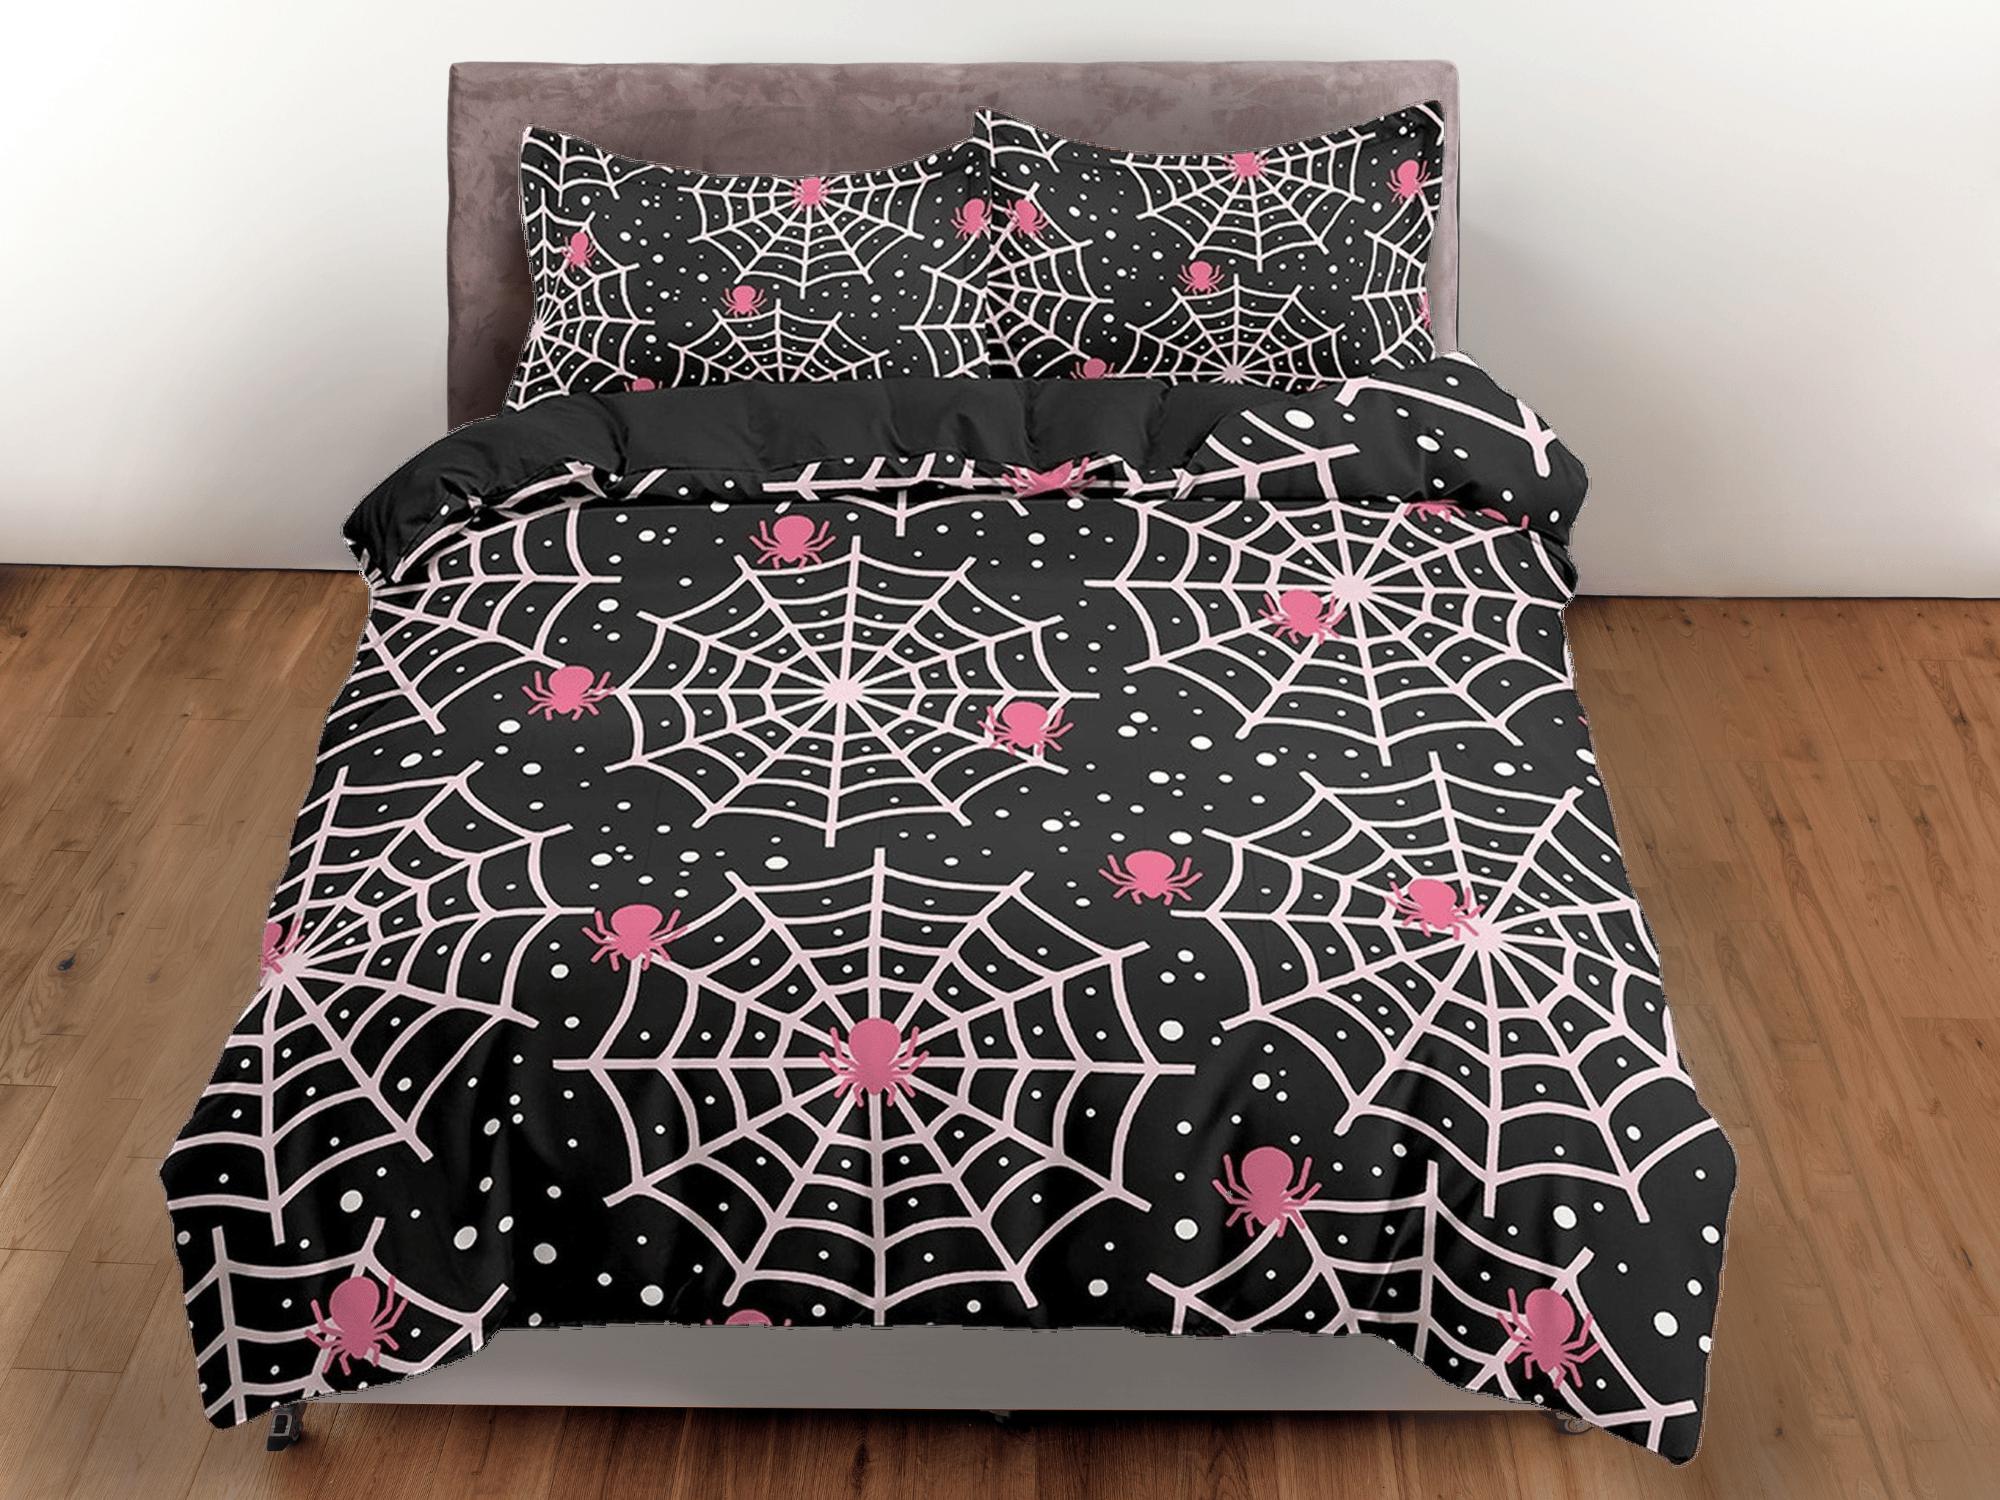 daintyduvet Pink spider web halloween bedding & pillowcase, black duvet cover set dorm bedding, halloween decor, nursery toddler bedding, halloween gift